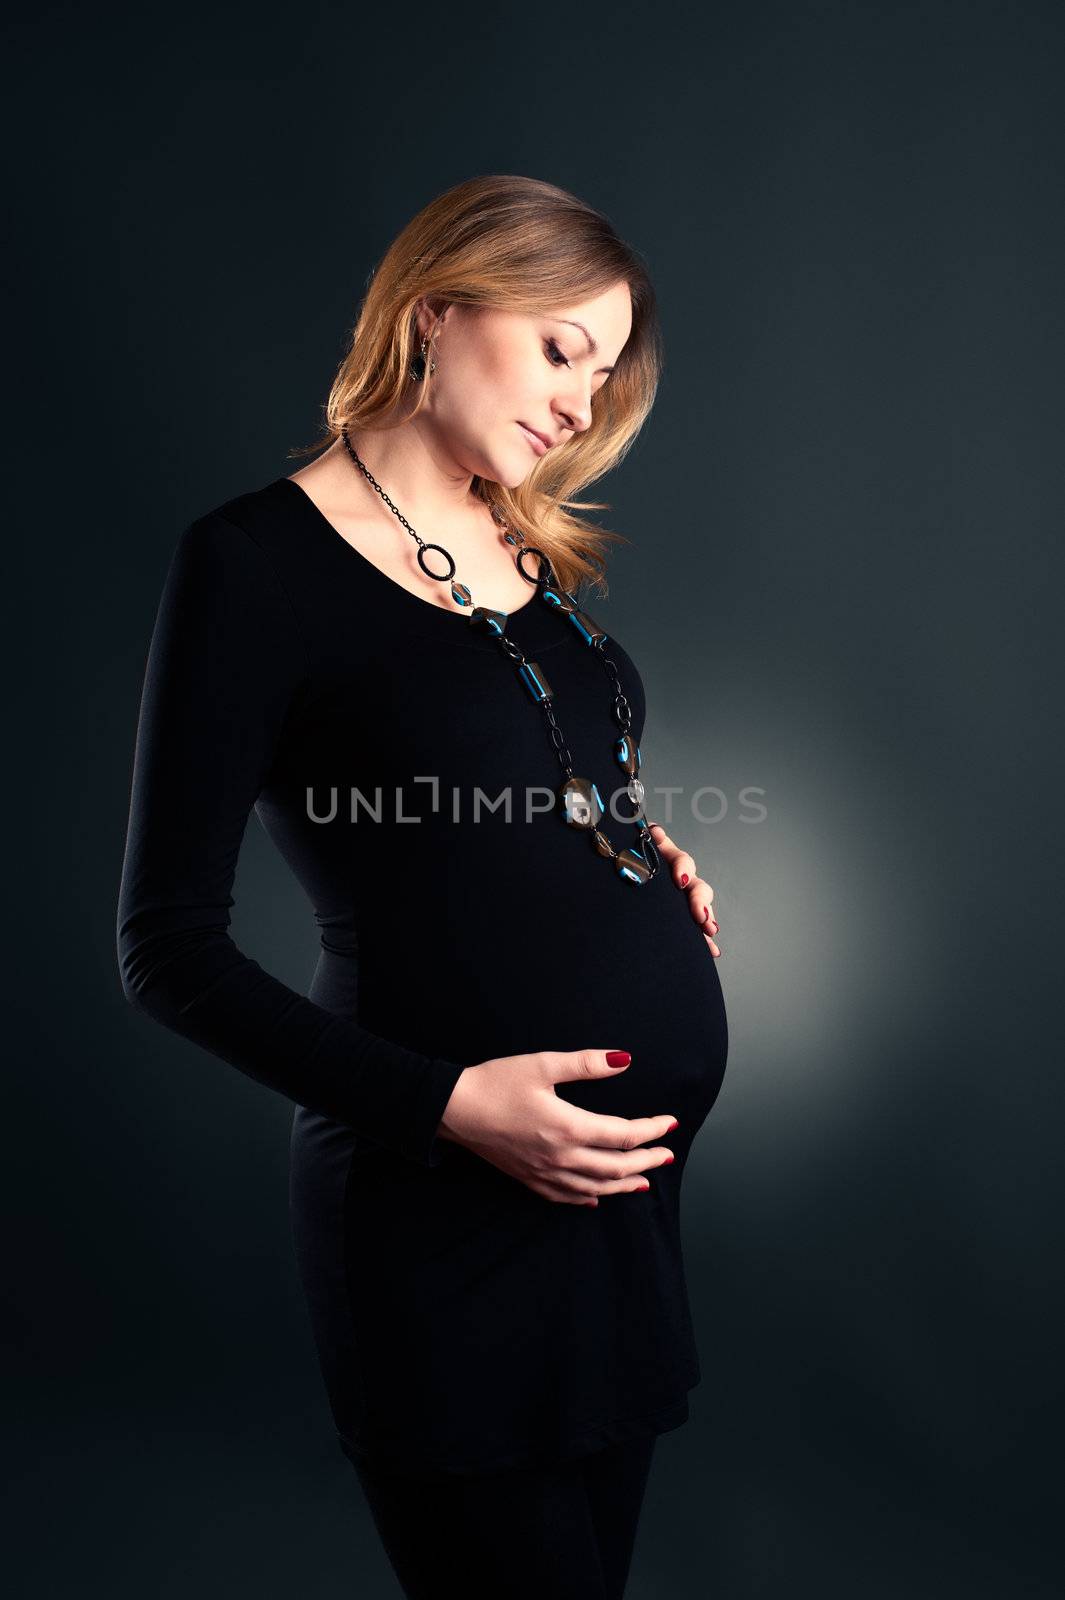 Studio shot of pregnant woman by nvelichko